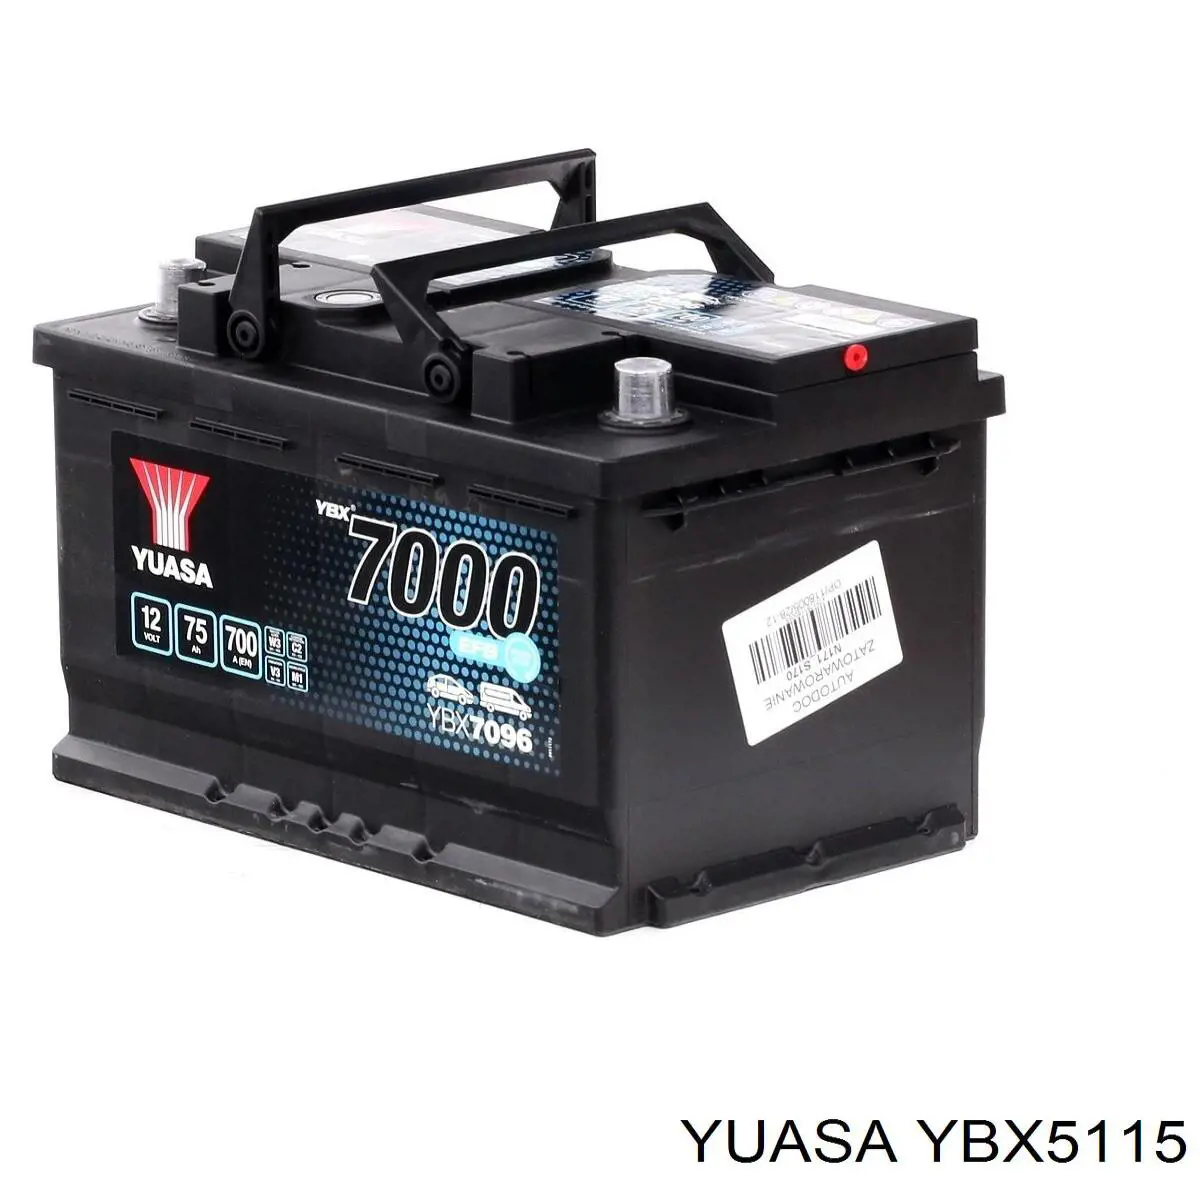 YBX5115 Yuasa bateria recarregável (pilha)